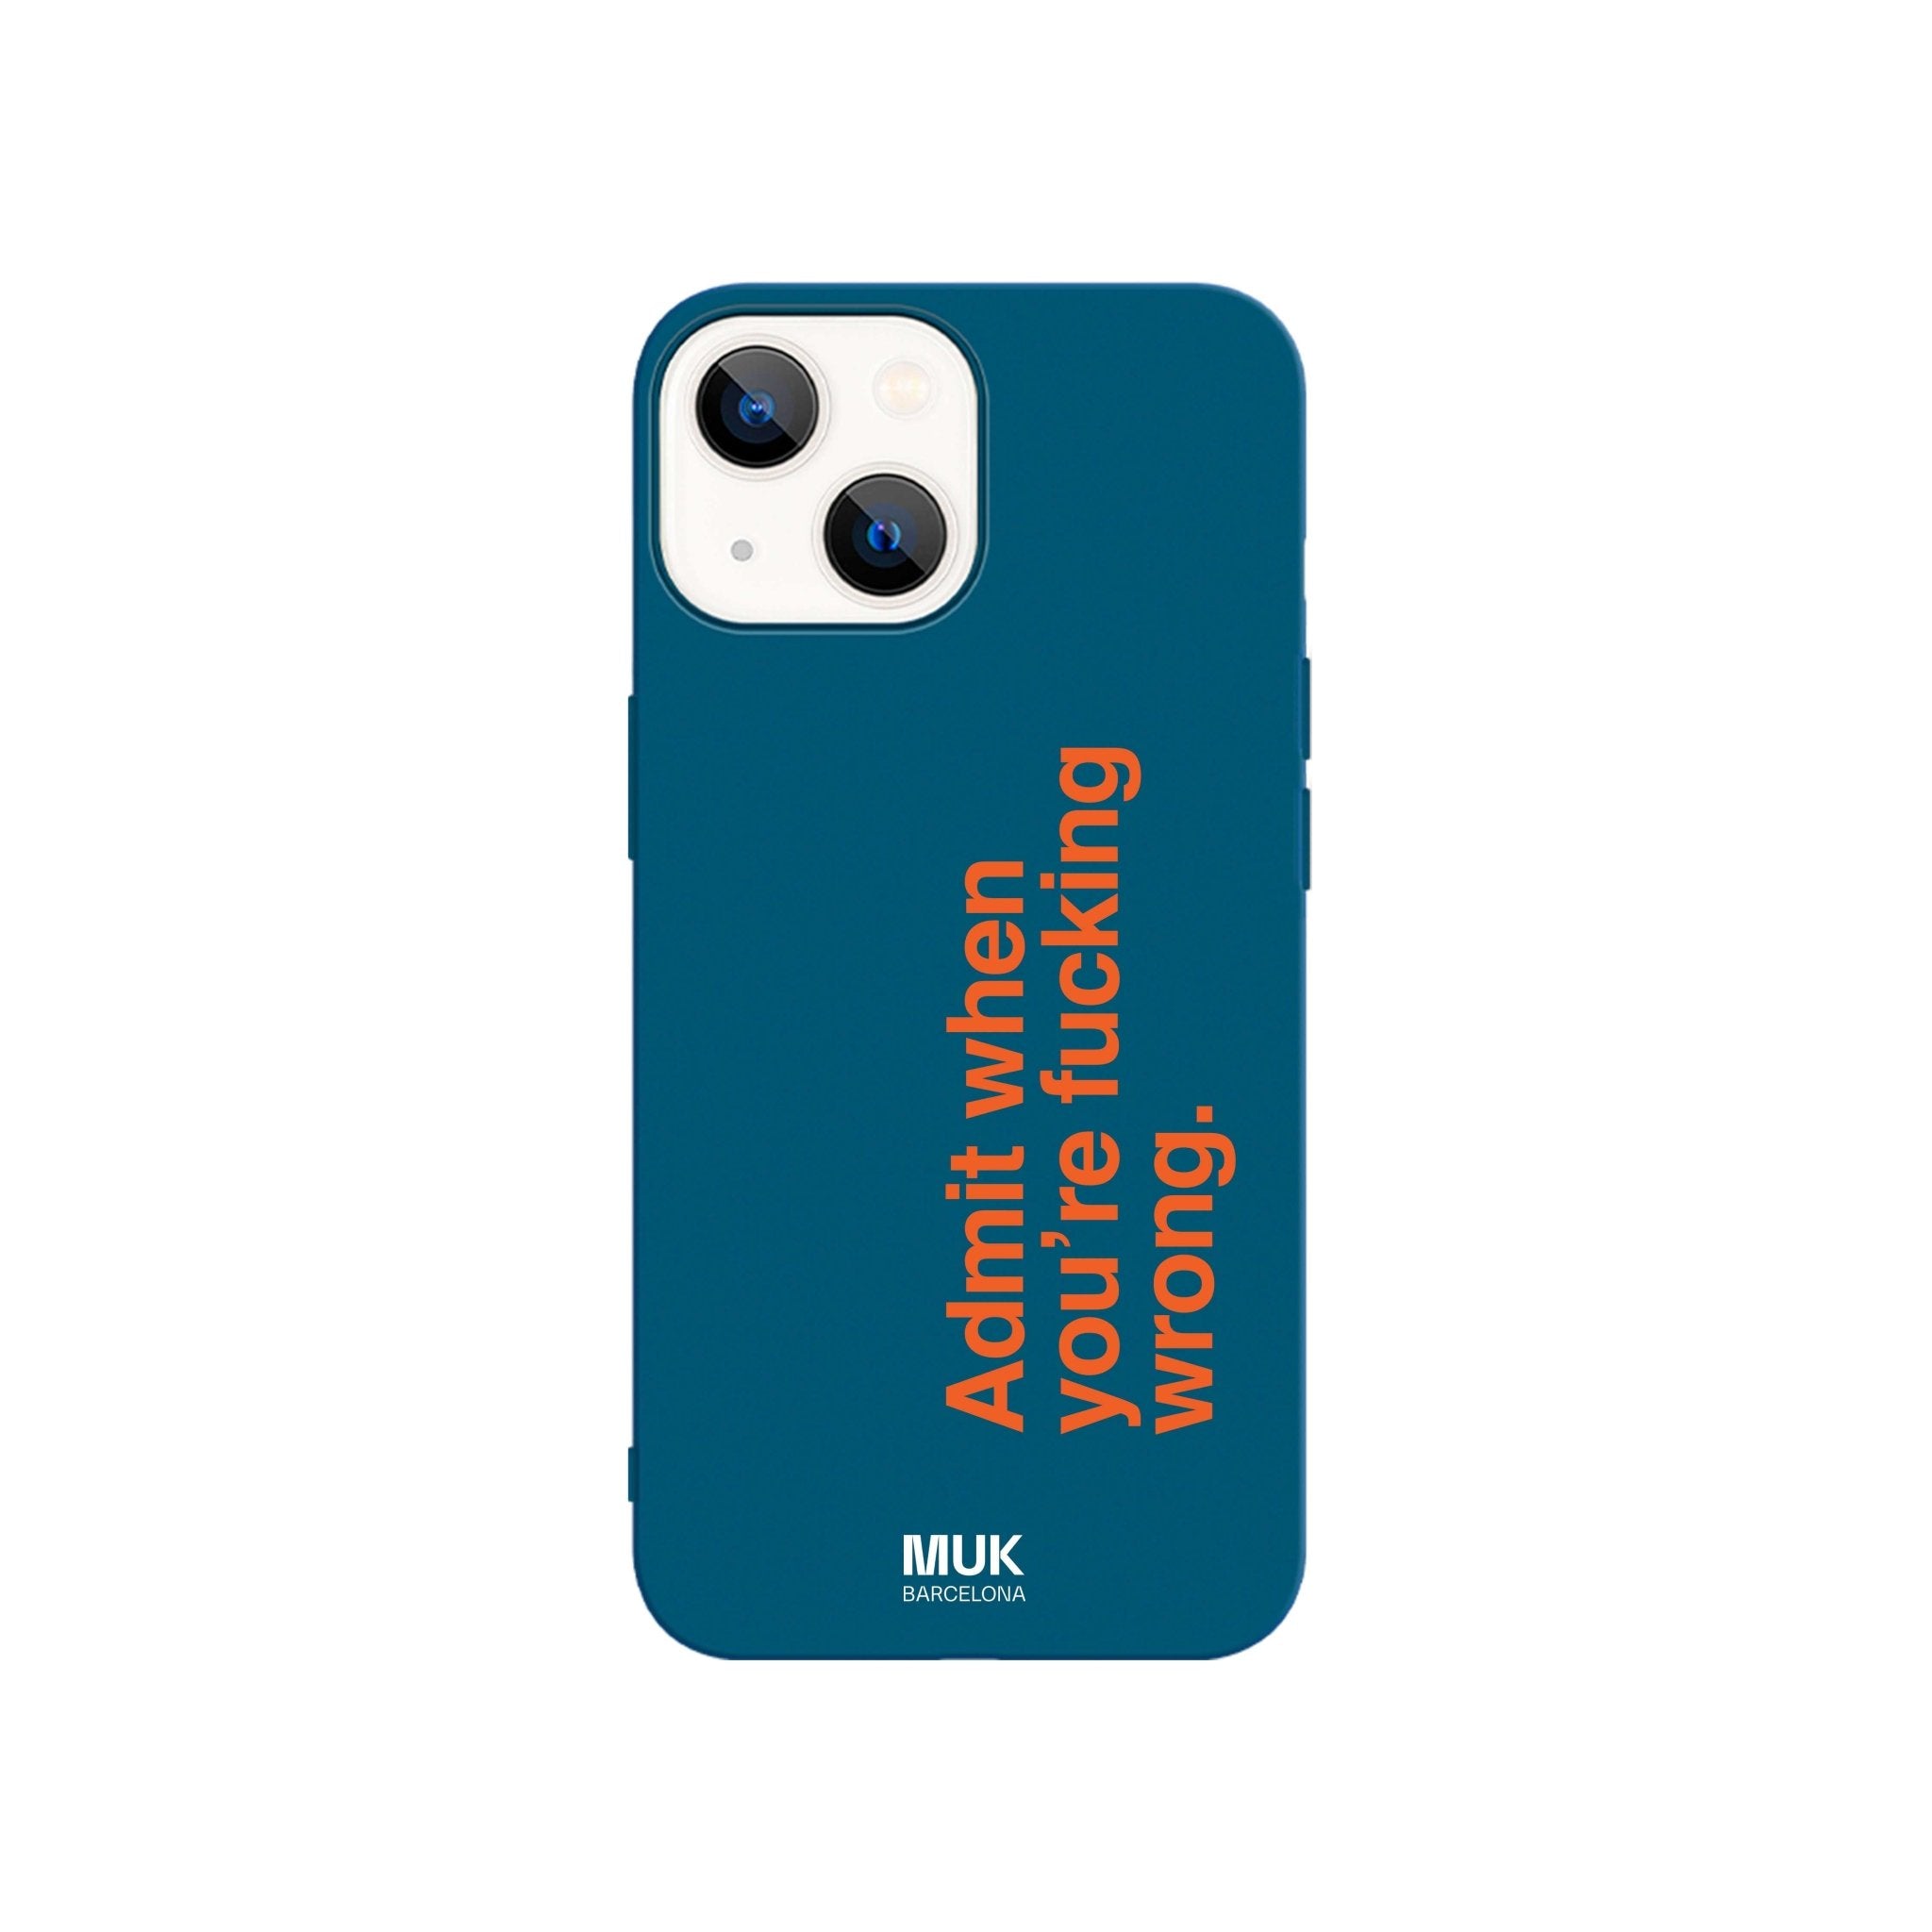 Funda de móvil TPU azul con texto lateral naranja
